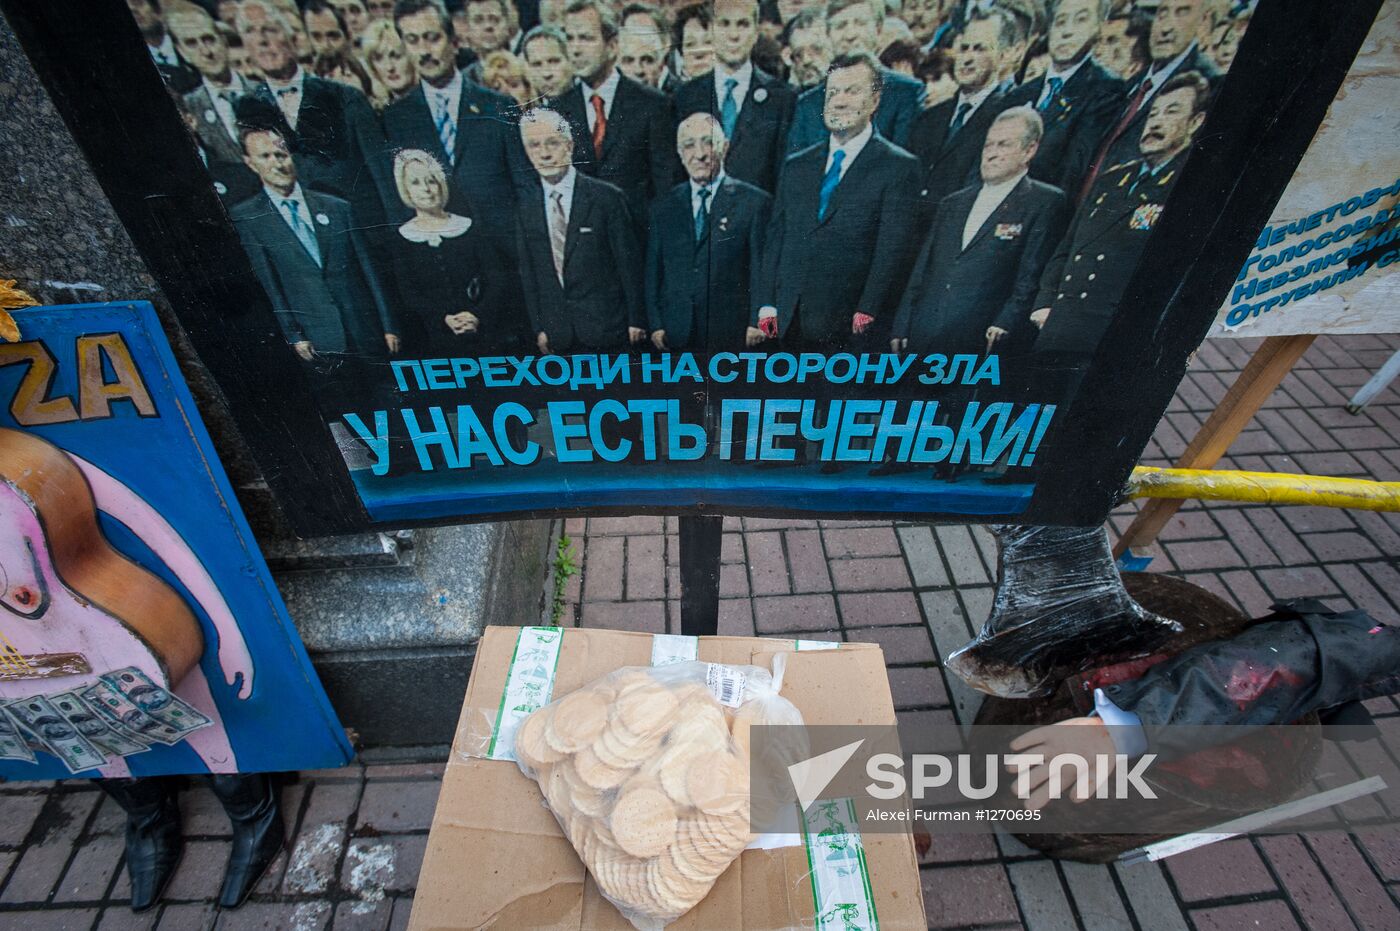 Election campaign in Ukraine